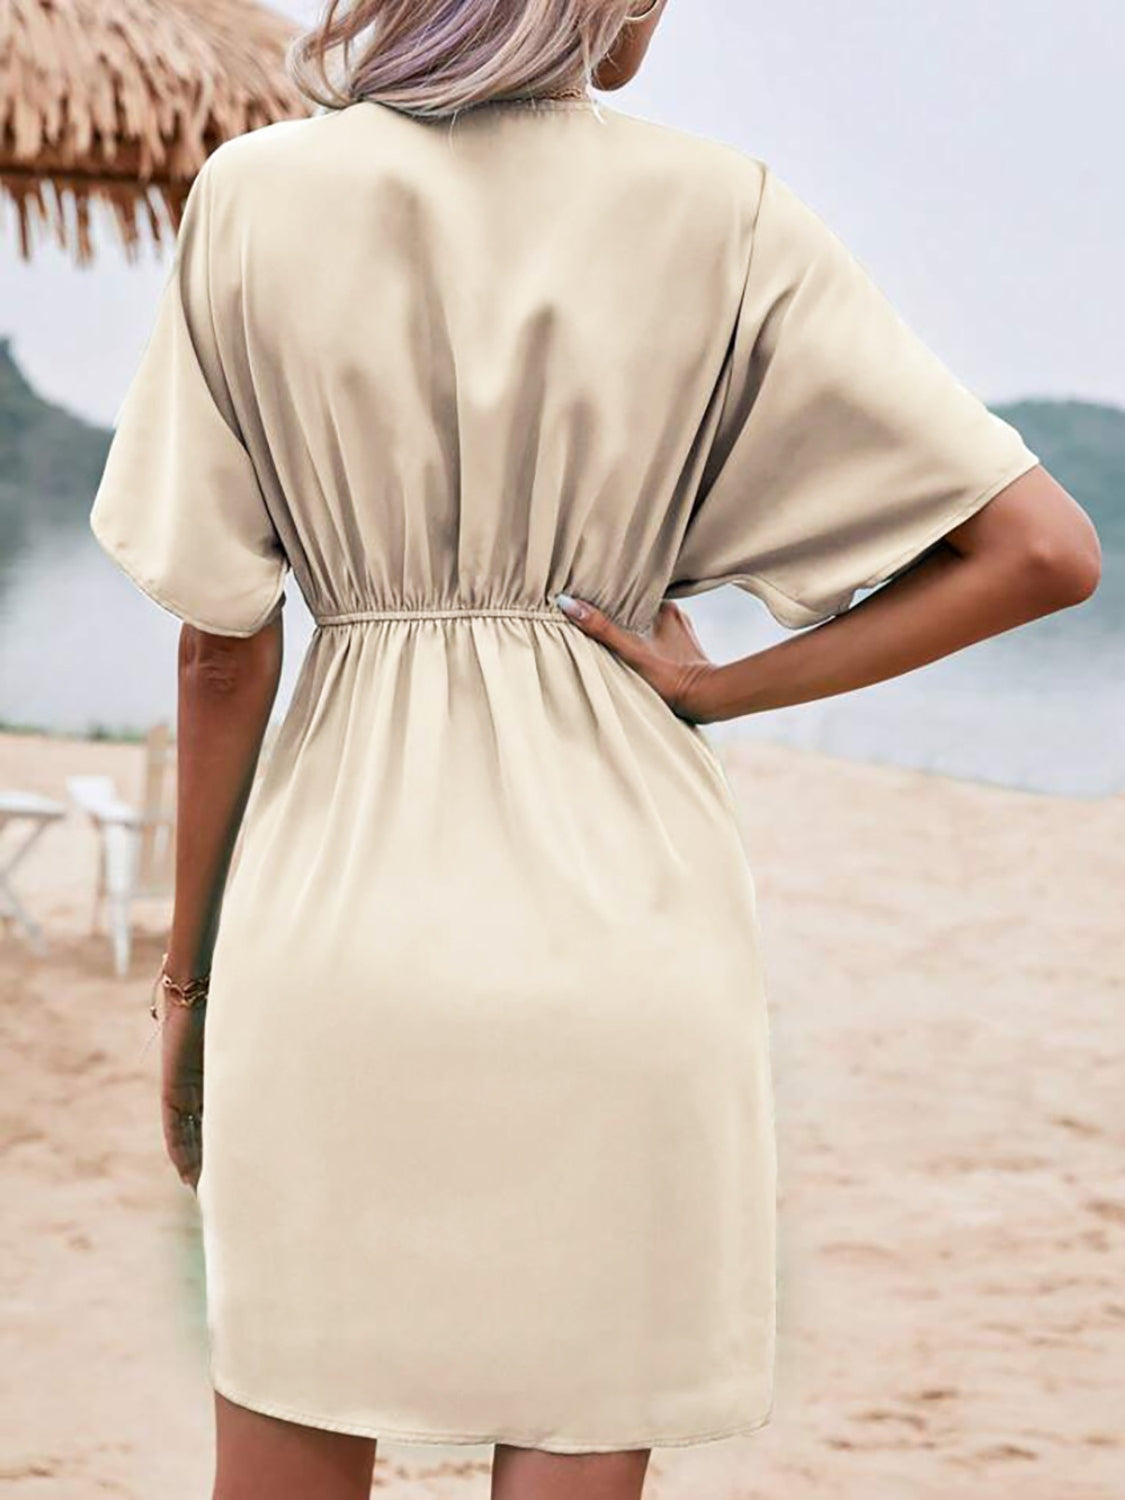 Plunge Neck Mini Dress | Plunging Neckline Short Dress with Sleeves.